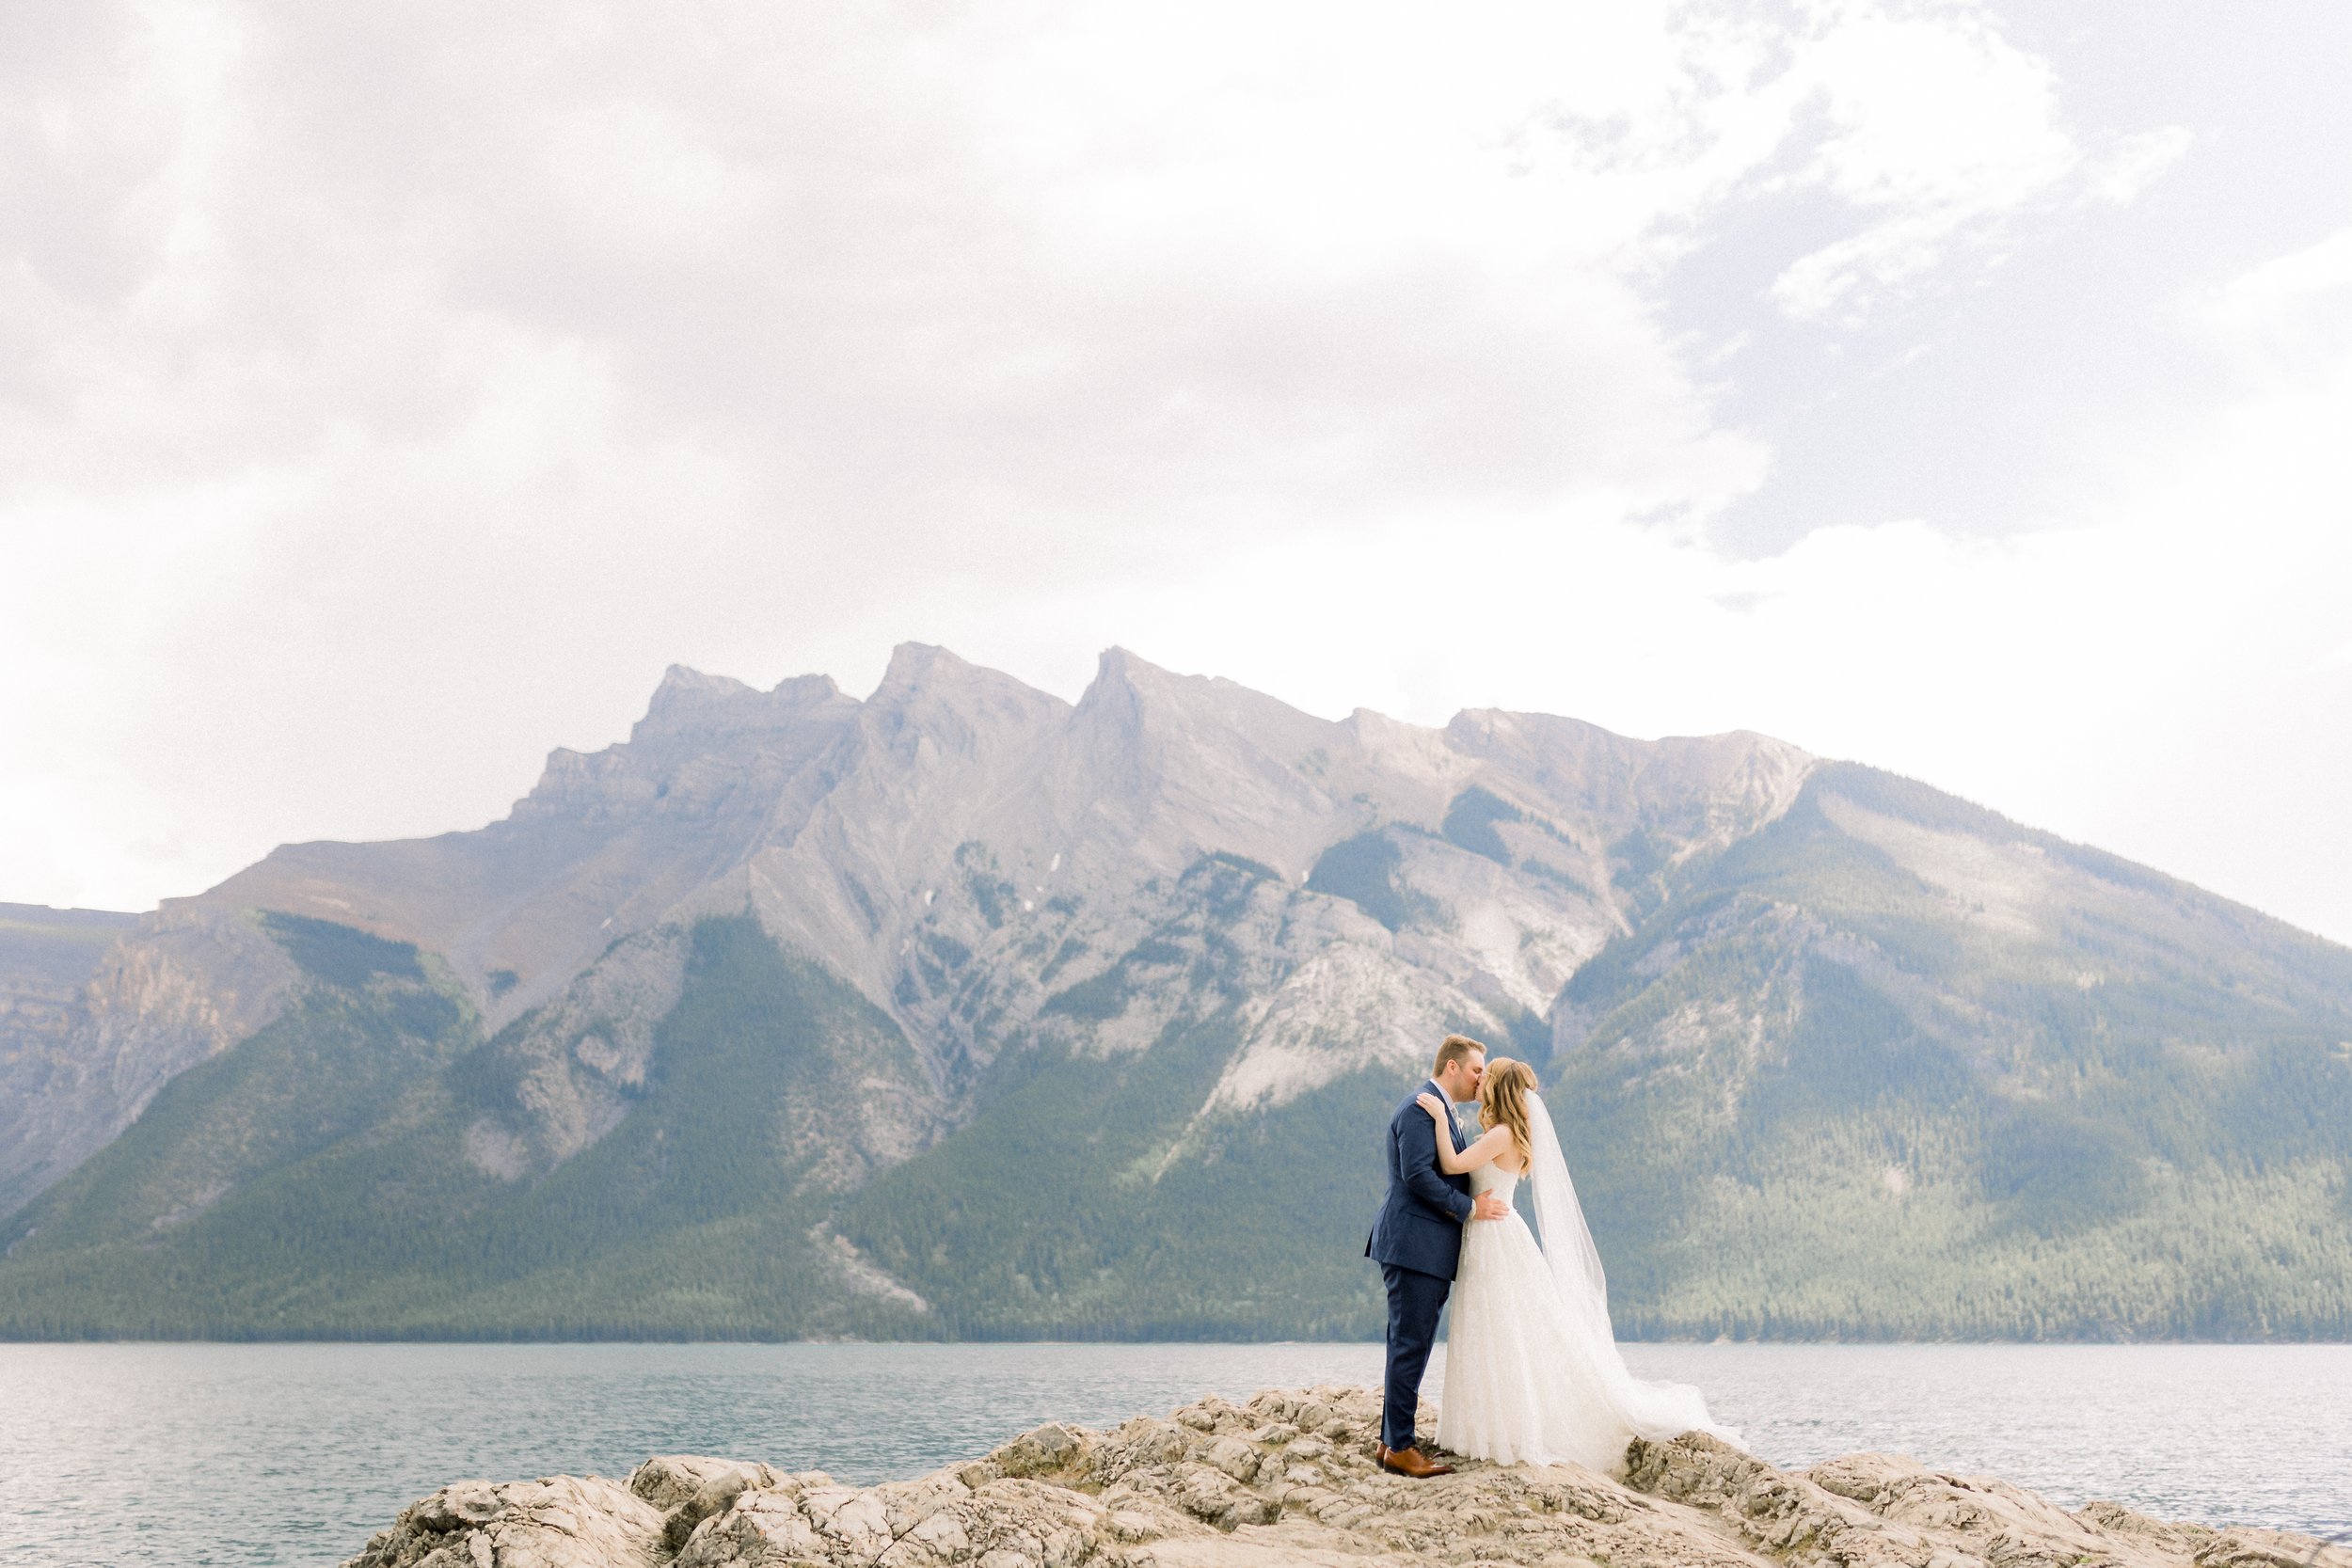 Sydney + John // A Beautiful Summer Wedding At Mount Norquay, Banff